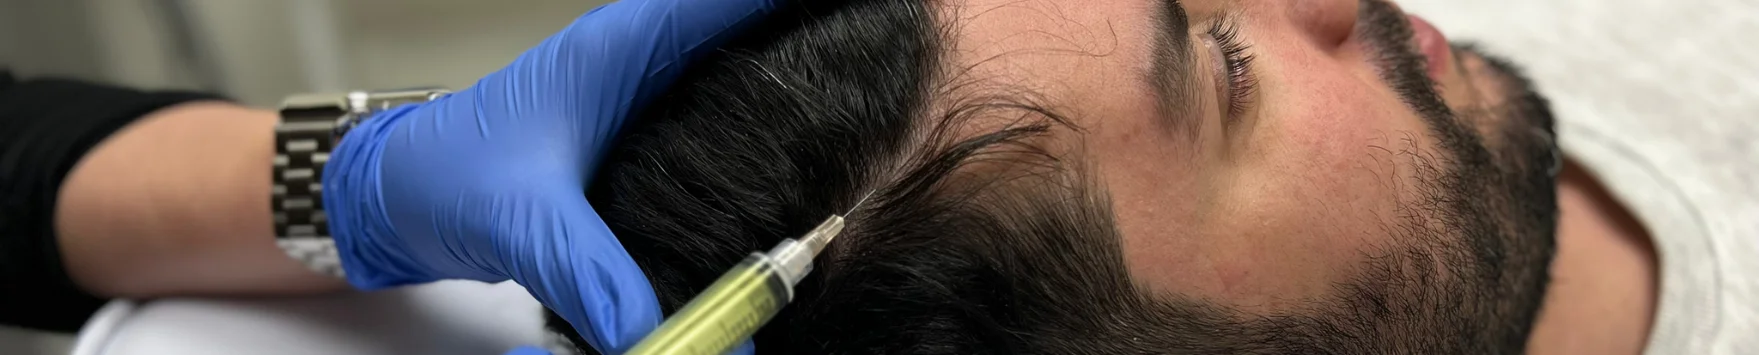 PRP Hair Restoration with Biotin